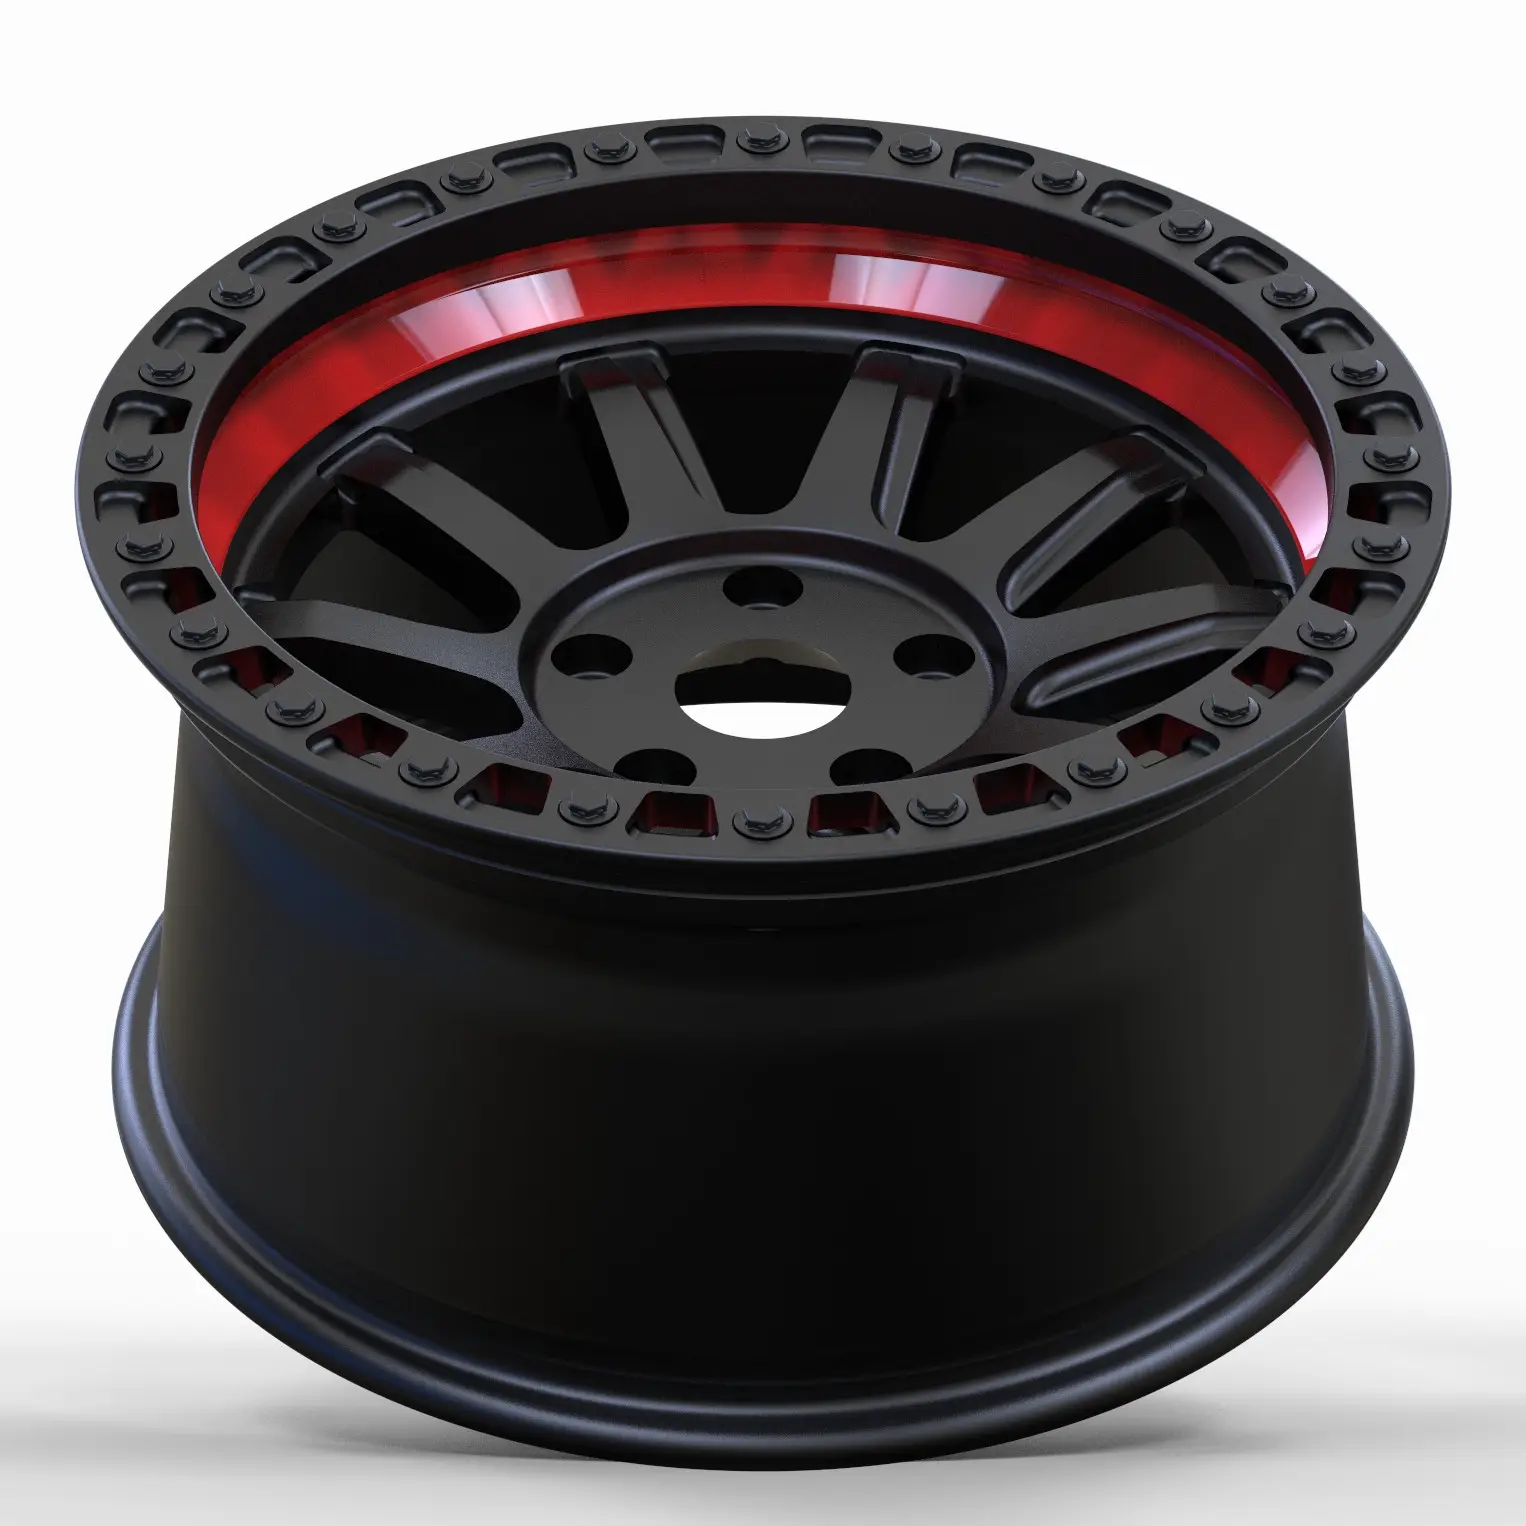 custom forged off road wheels 4x4 wheels 17 18 inch wheels rims Matte black for GMC jeep wrangler Defender